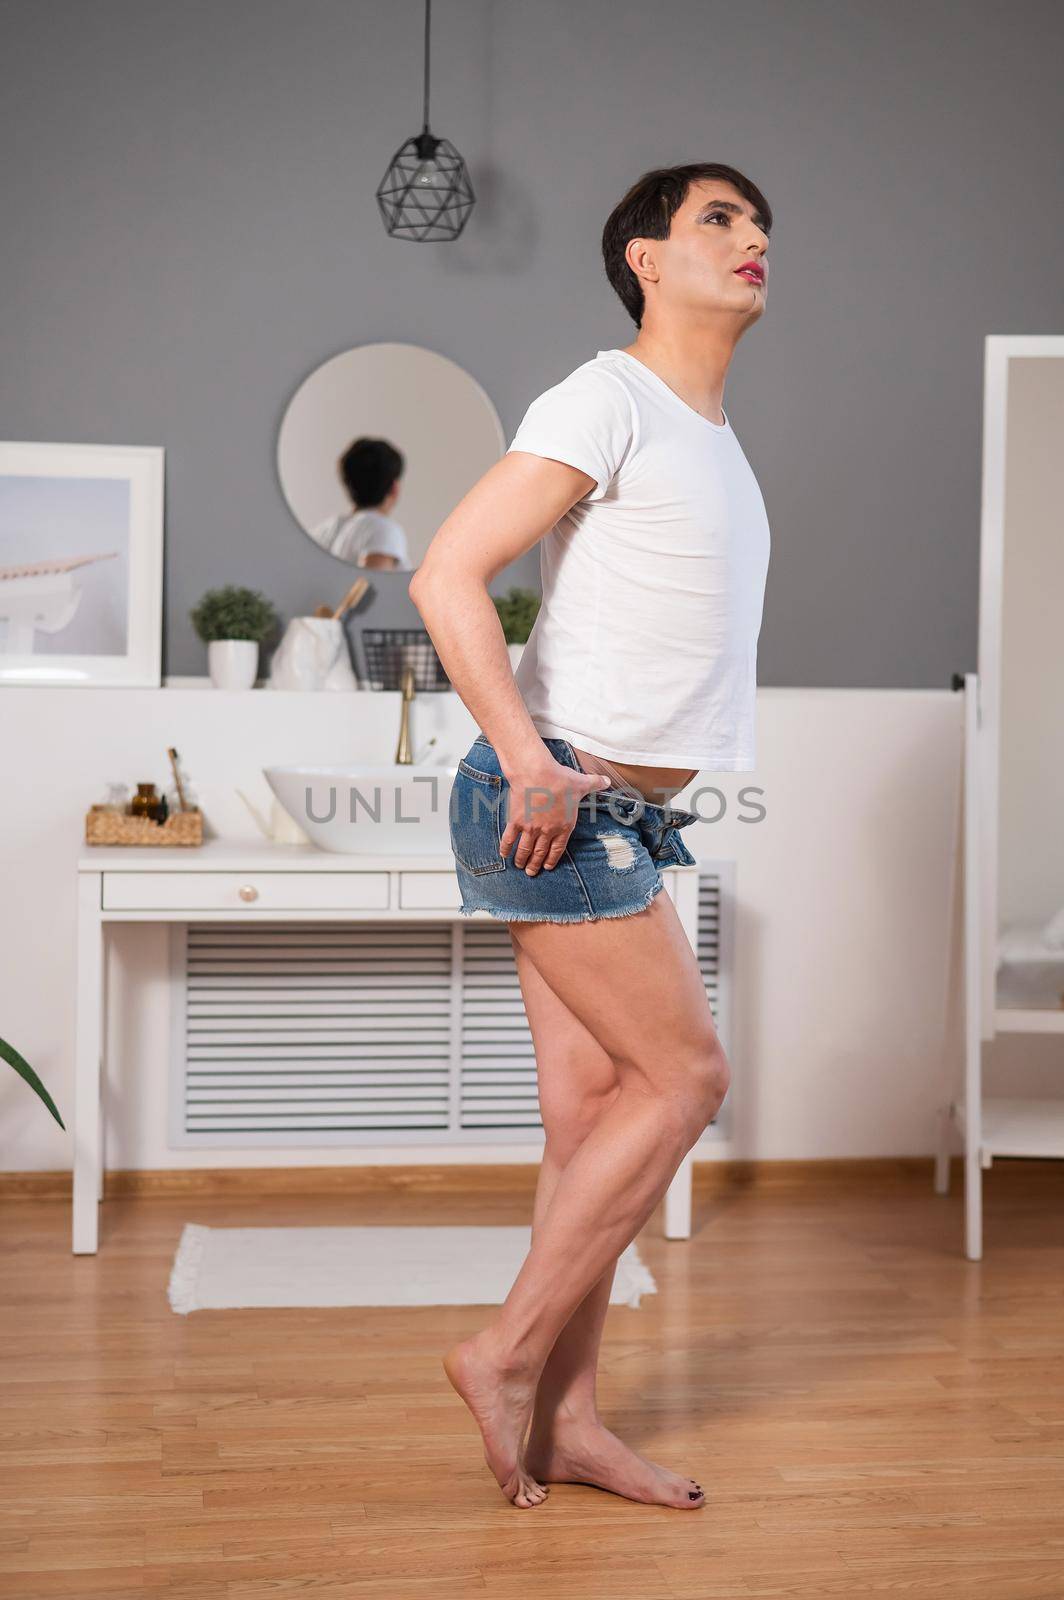 Caucasian gay man takes off his shorts erotically. Gender diversity